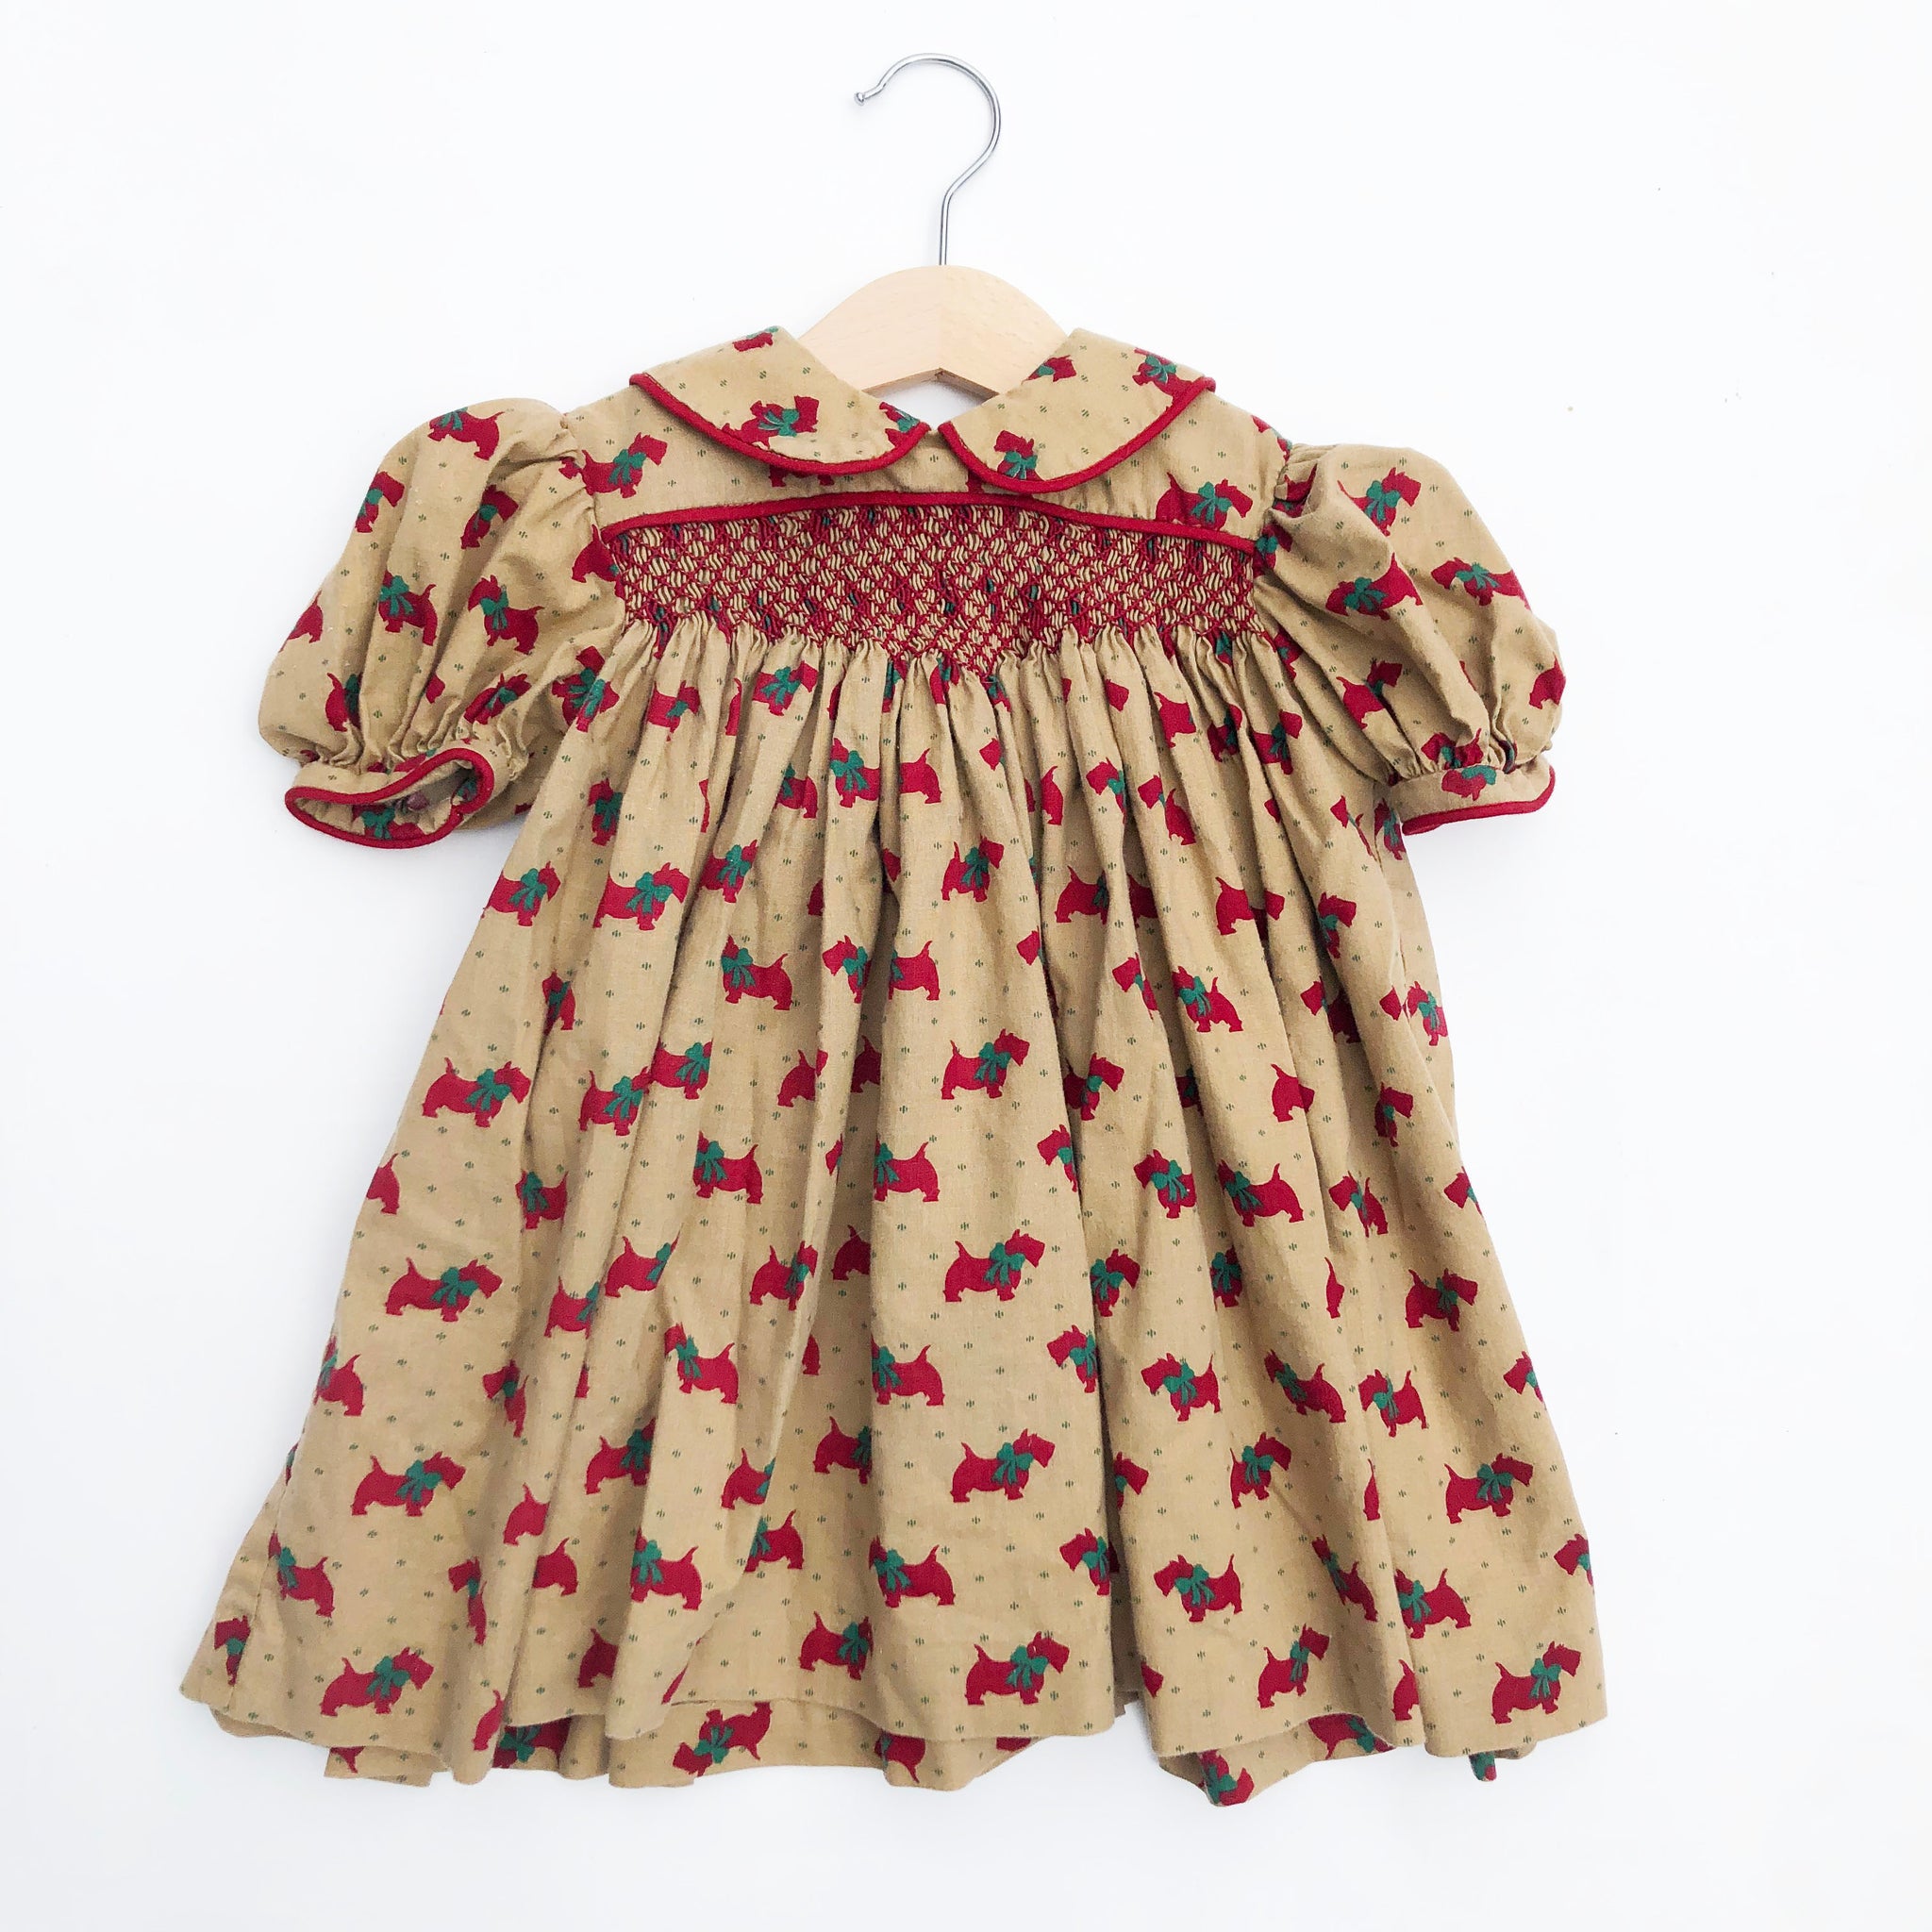 Little Vintage Hand Made Dress size 12-18 months